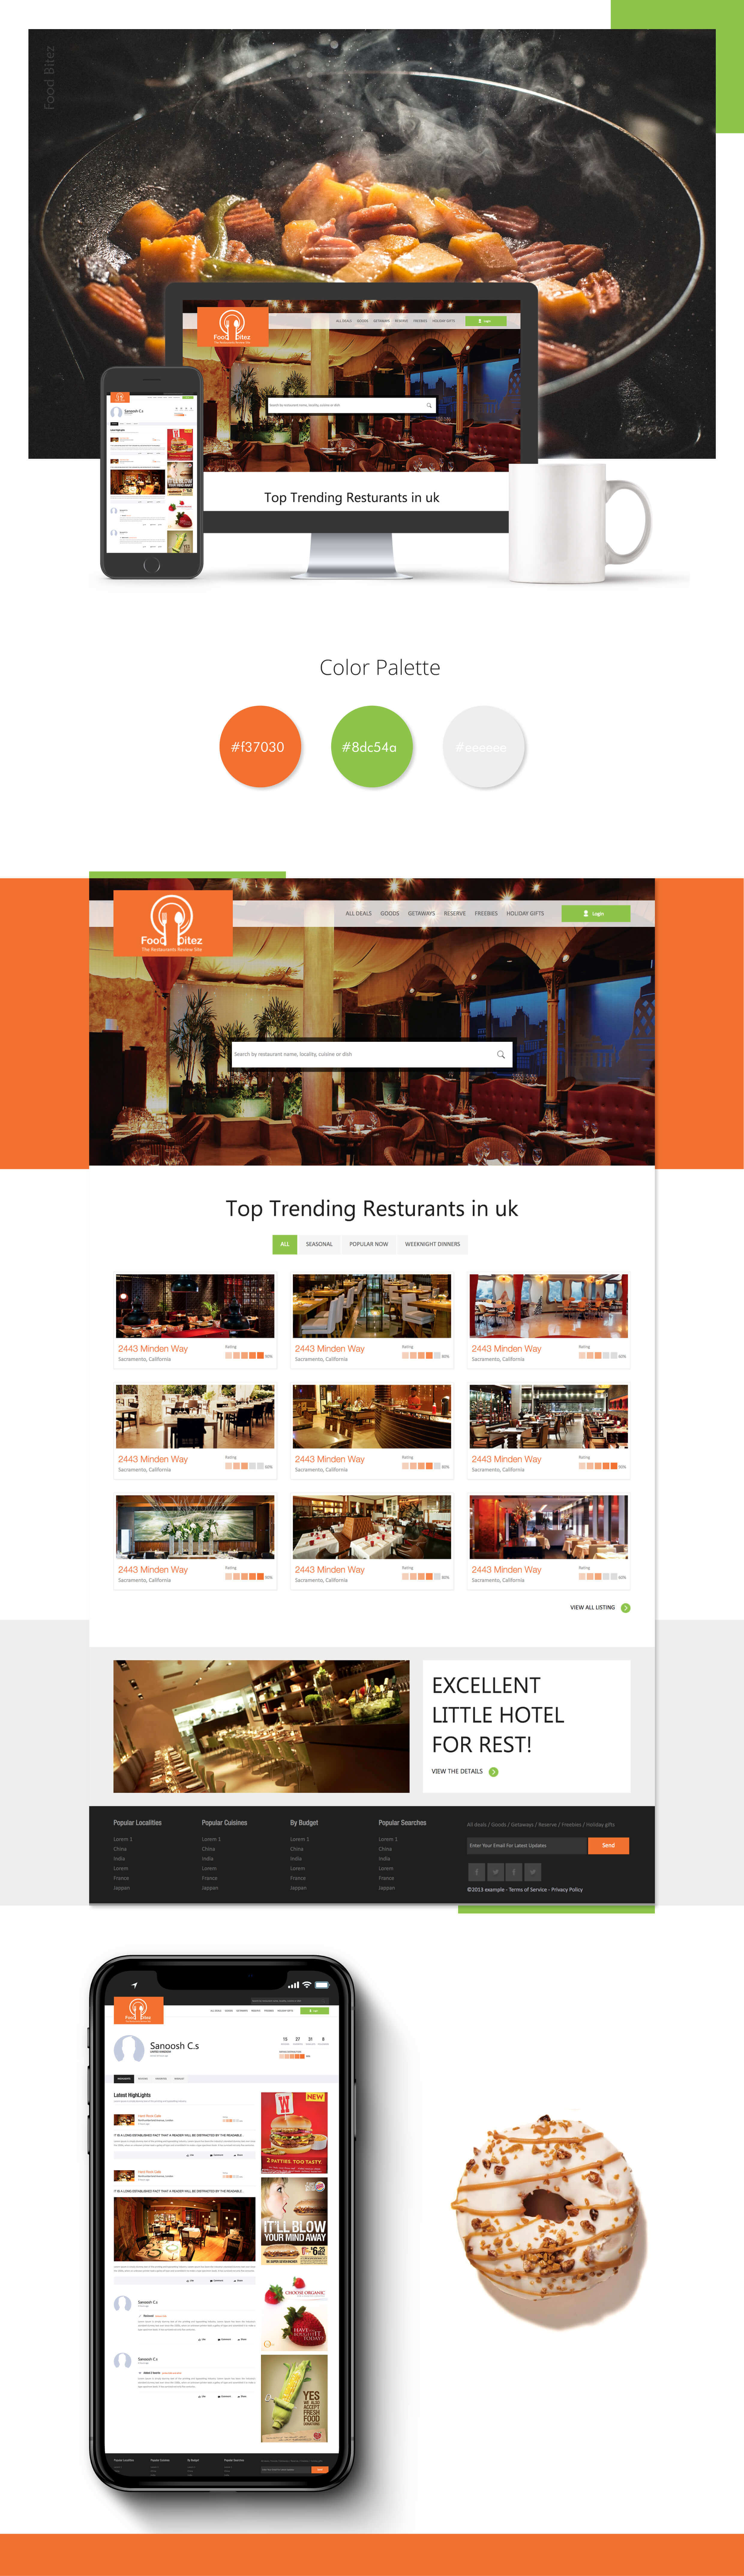 food bites restaurant review website design by Sajid Sulaiman